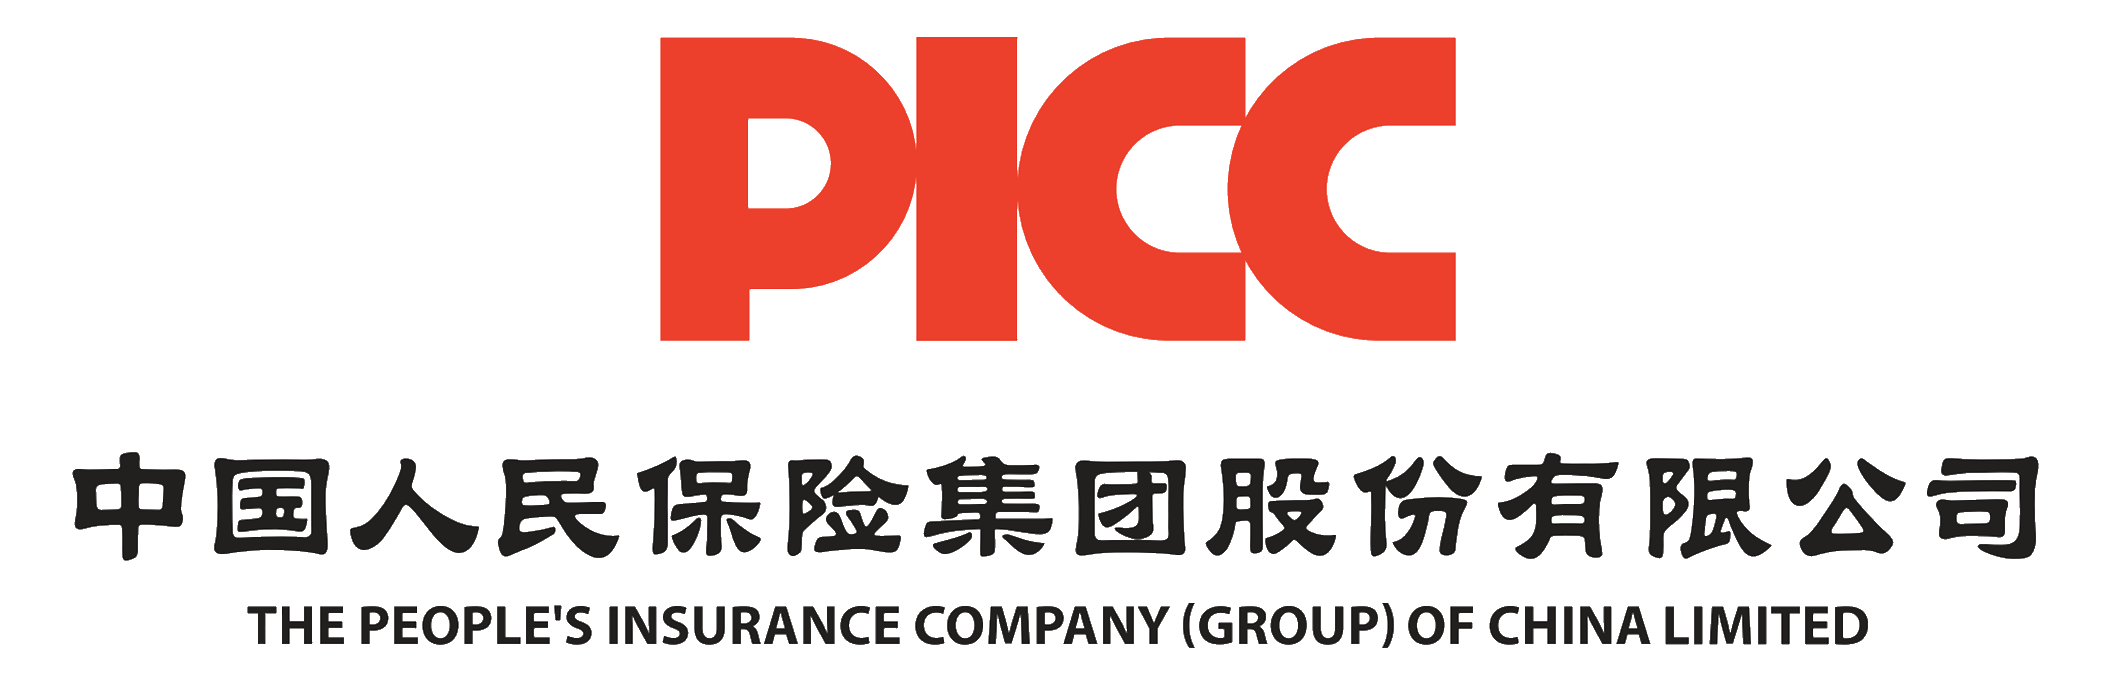 Chinese Phone Company Logo - People's Insurance Company of China logo 2.png